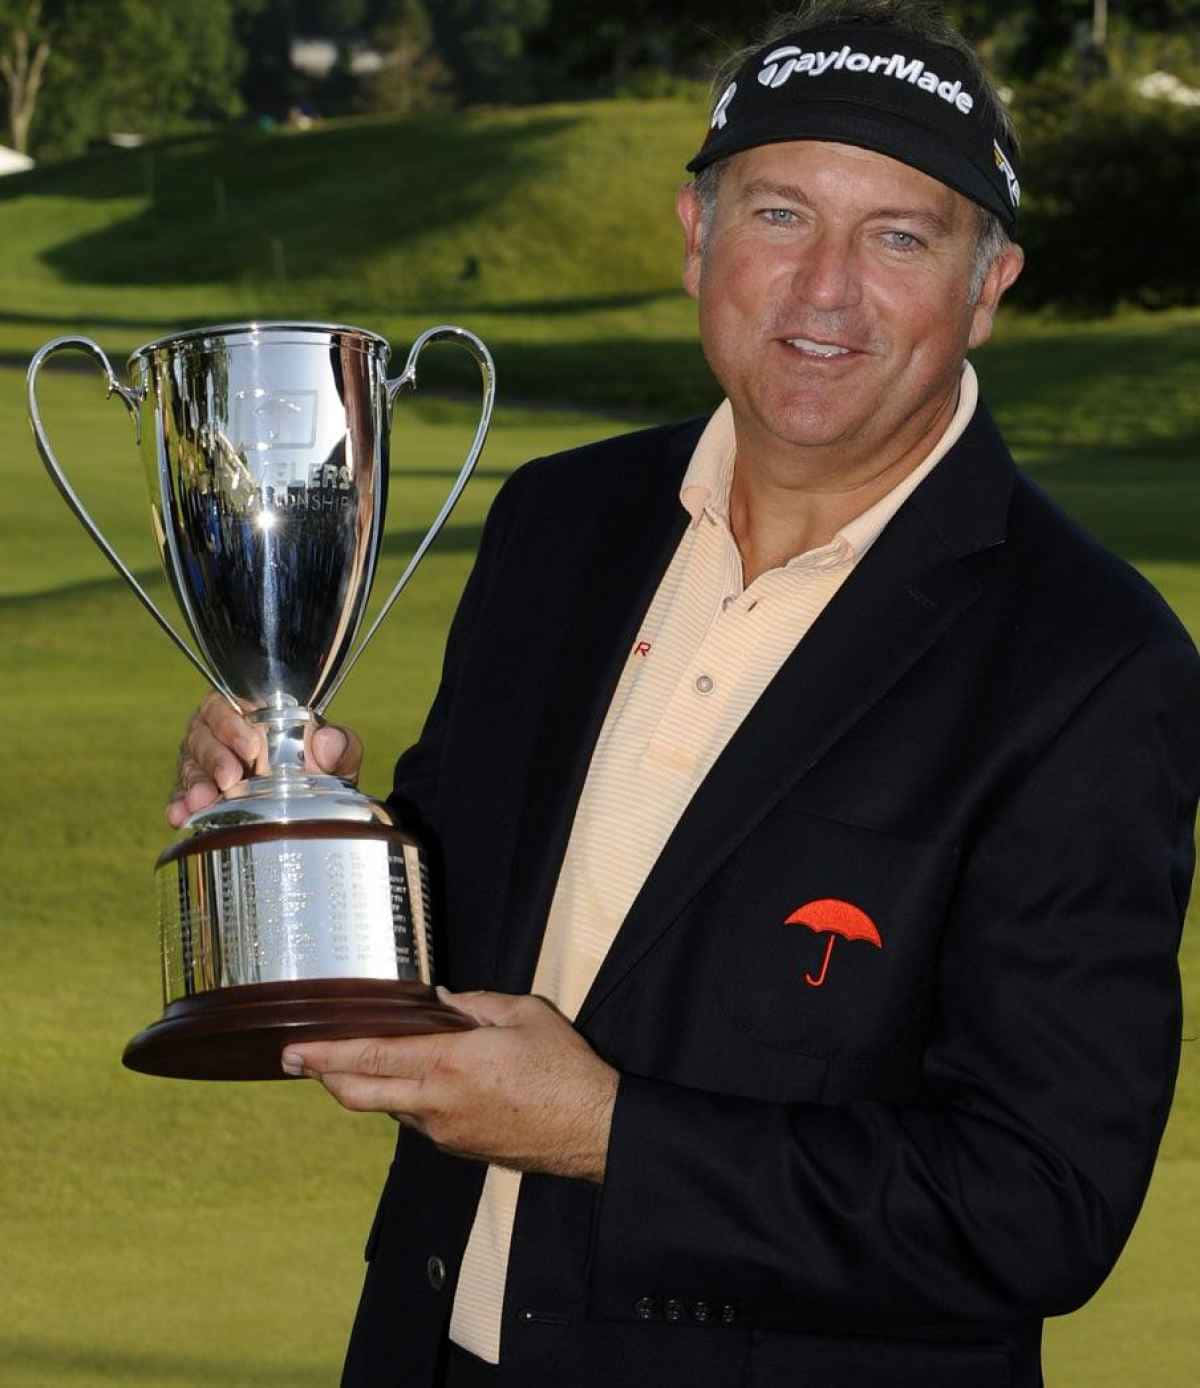 Proud Ken Duke holding the trophy he recently won. Wallpaper